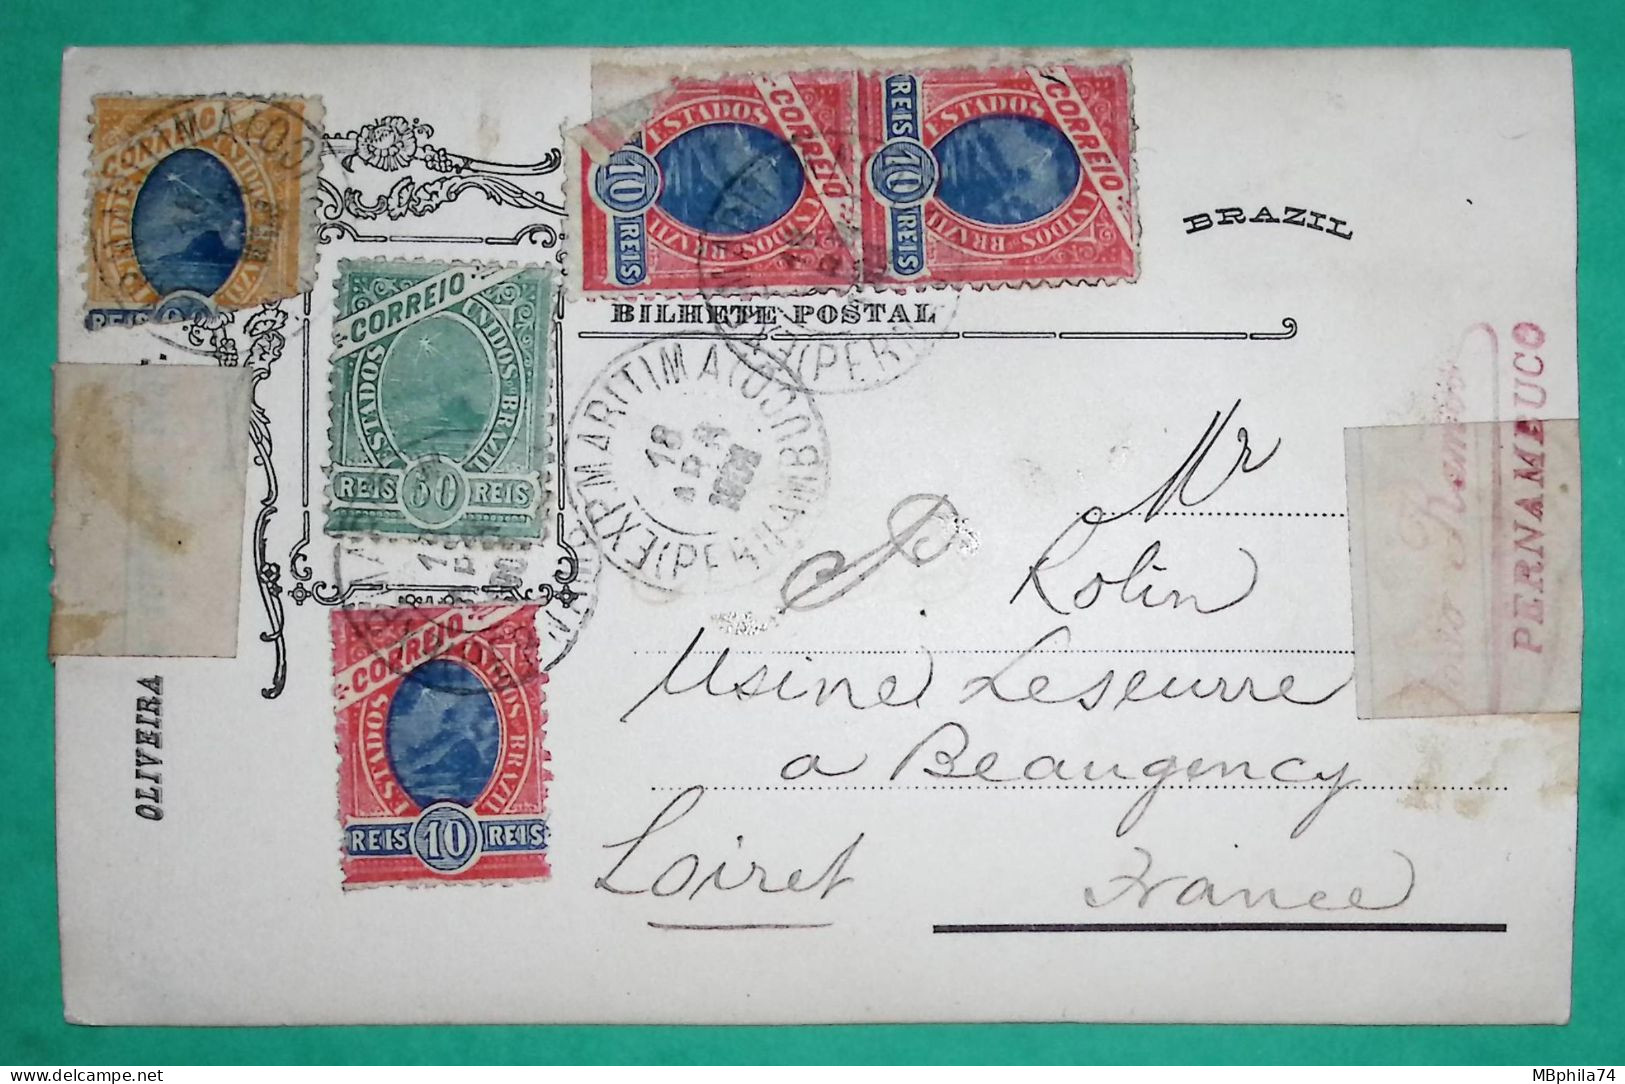 CARTE POSTALE POST CARD RECIFE PERNAMBUCO BRASIL BRESIL FOR BEAUGENCY LOIRET FRANCE 1903 FRANCE - Covers & Documents